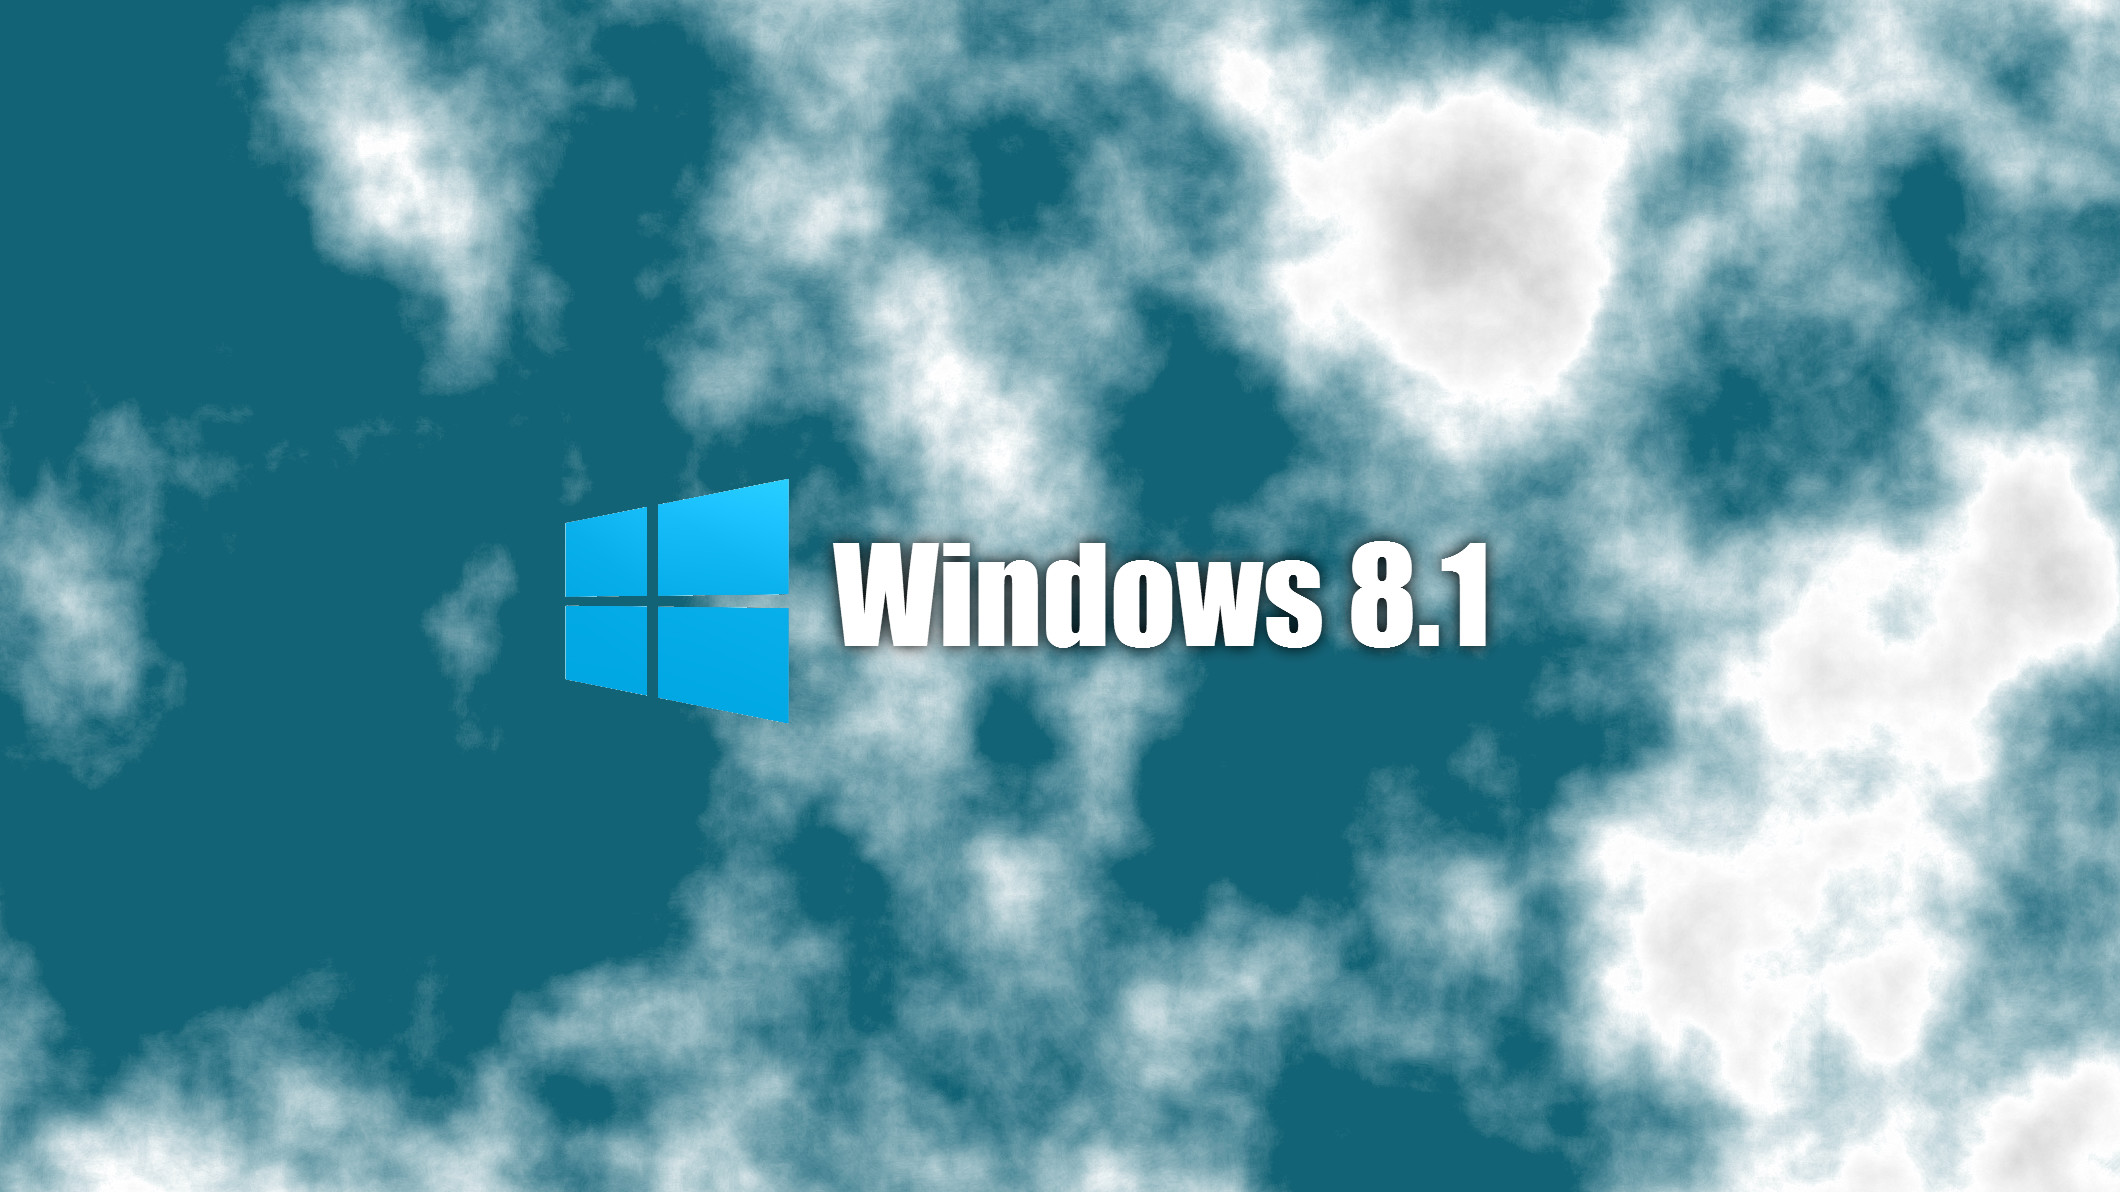 2120x1192 windows_8_1_desktop_background_by_theradiationmaster-d7dra4f  wallpaper_windows_8_1_snes_style_by_jamessalvation-d7judbp Blue-Windows-8.1- Wallpaper ...